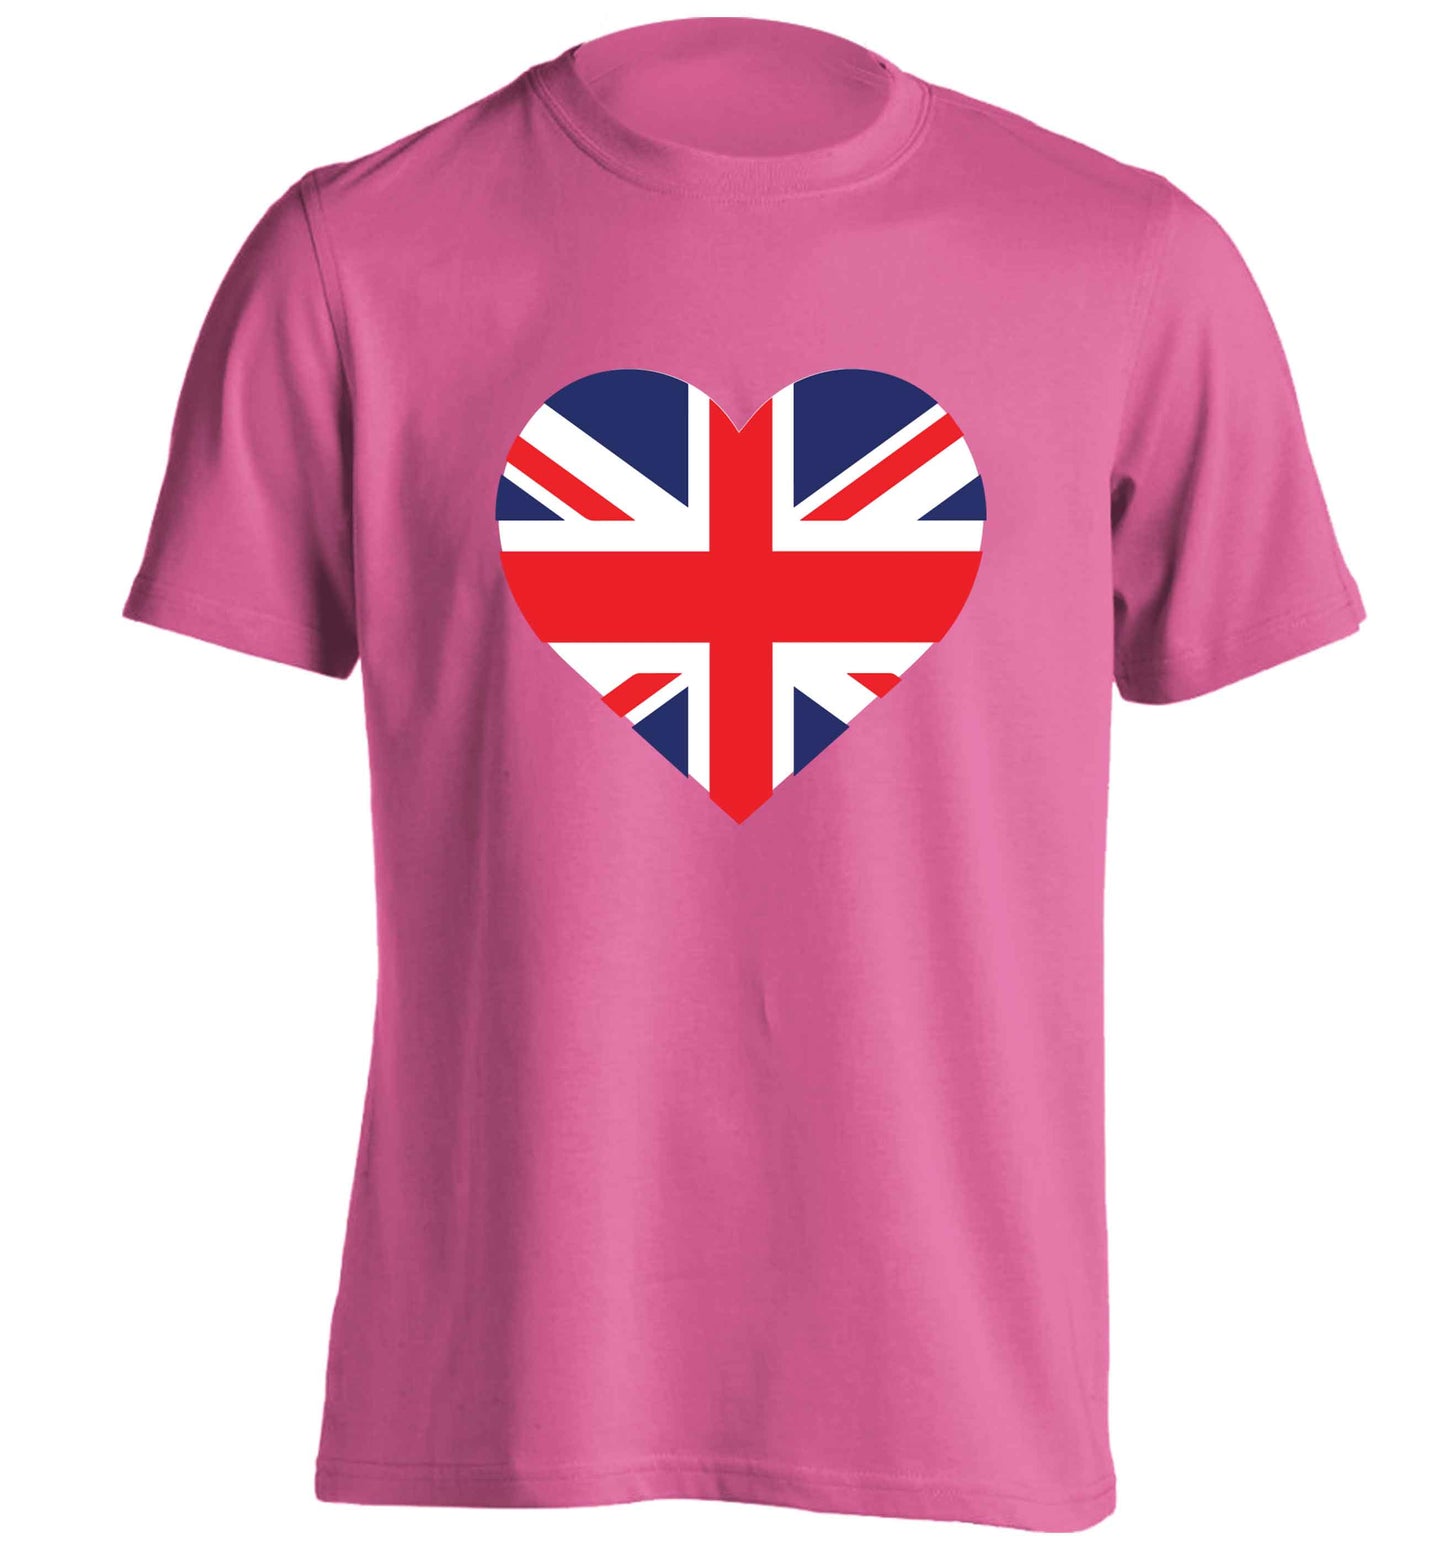 Union Jack Heart adults unisex pink Tshirt 2XL